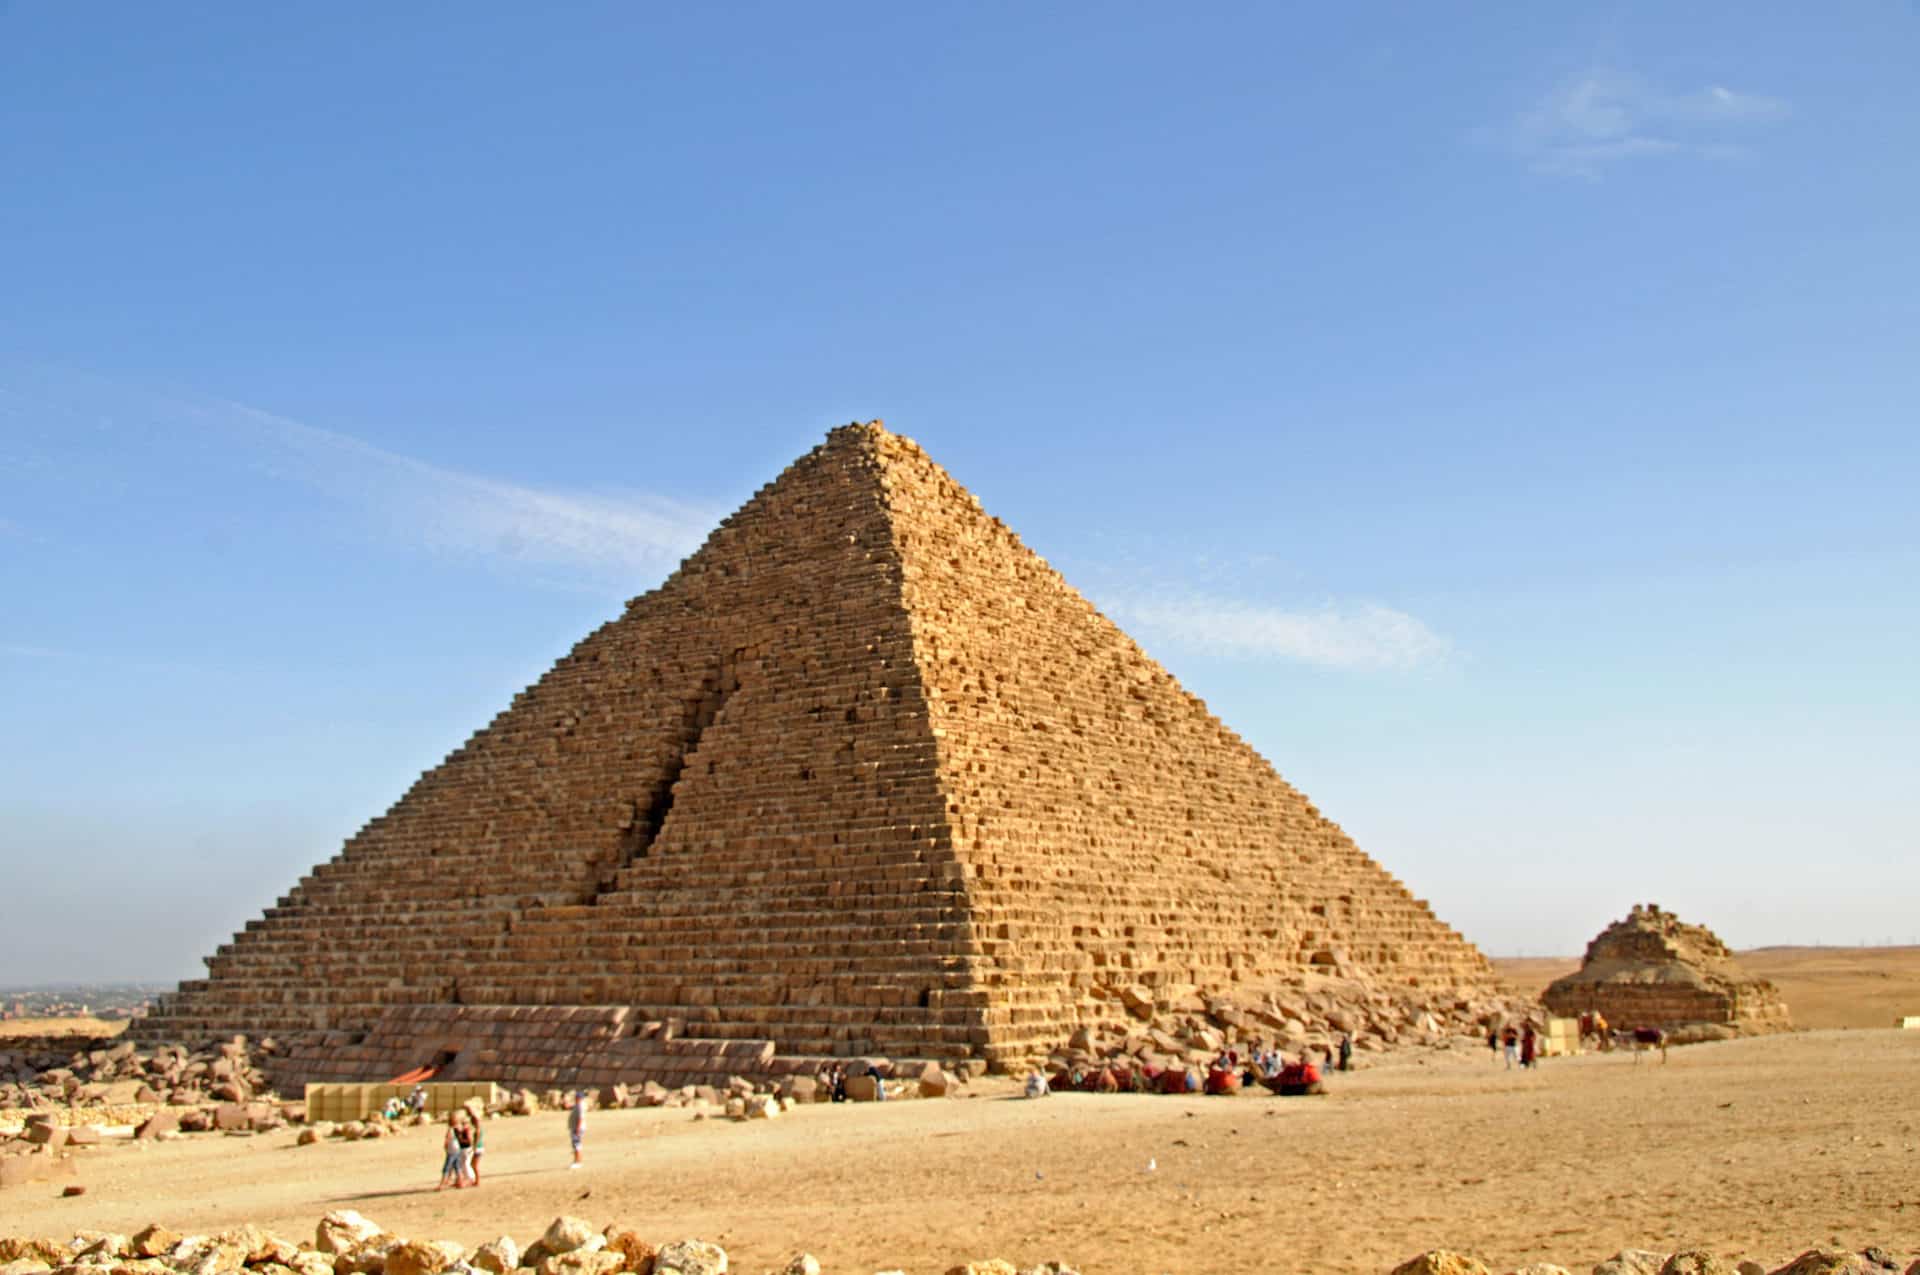 Pyramid of Menkaure, the great pyramids of Giza